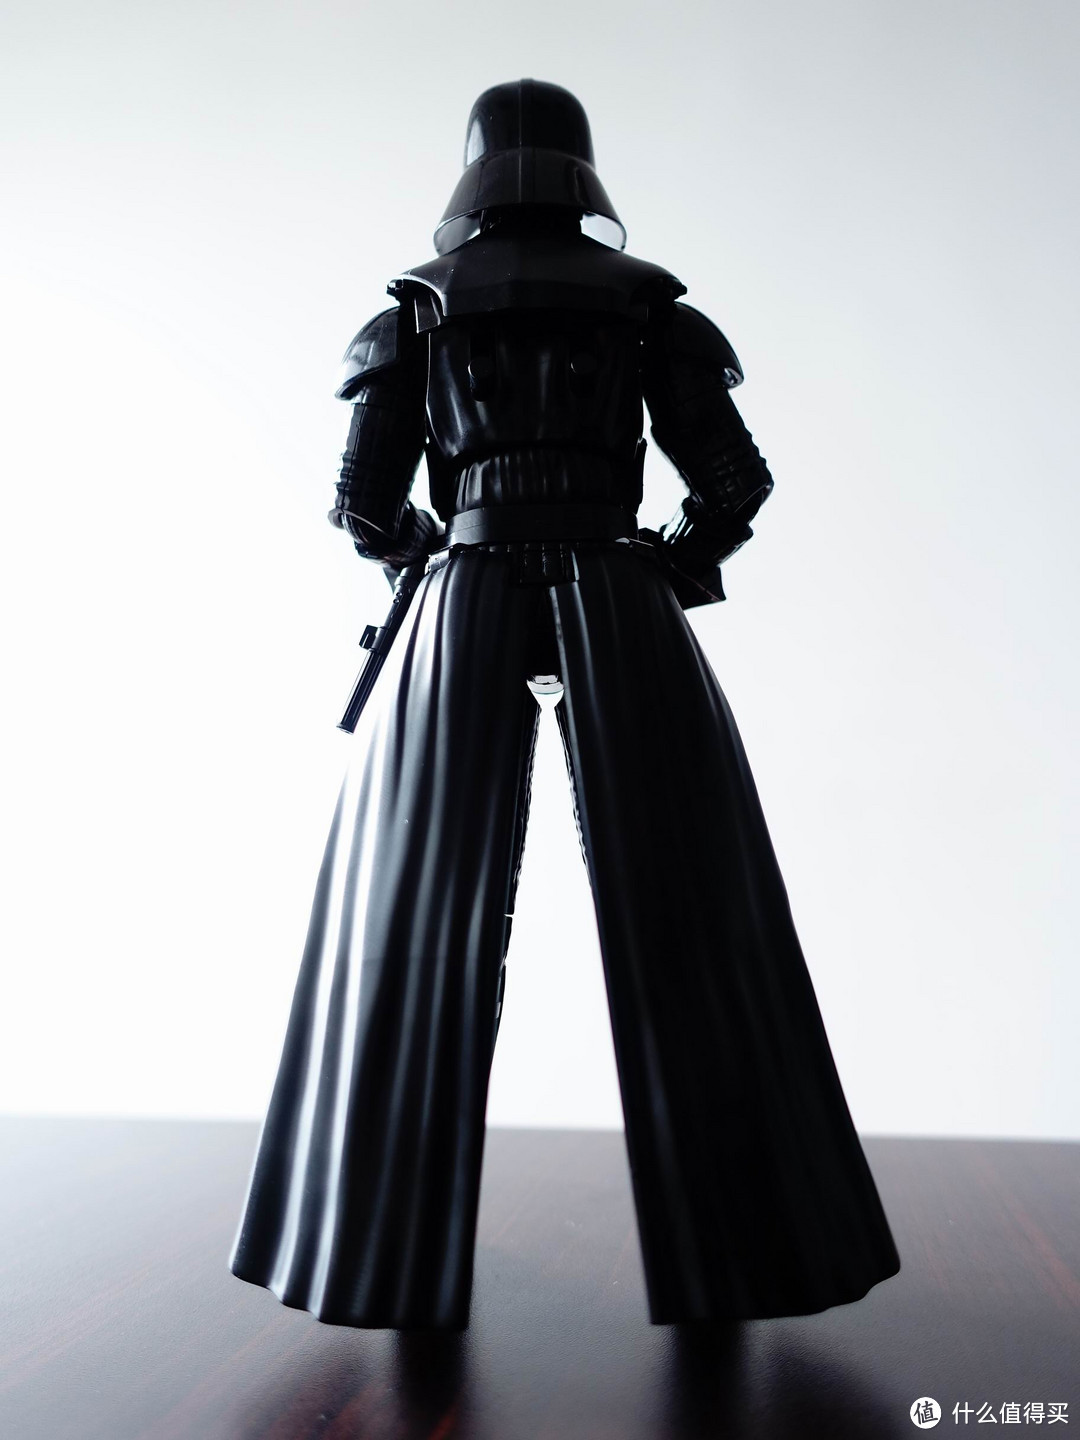 BANDAI 万代 星球大战系列之 Darth Vader 达斯维达